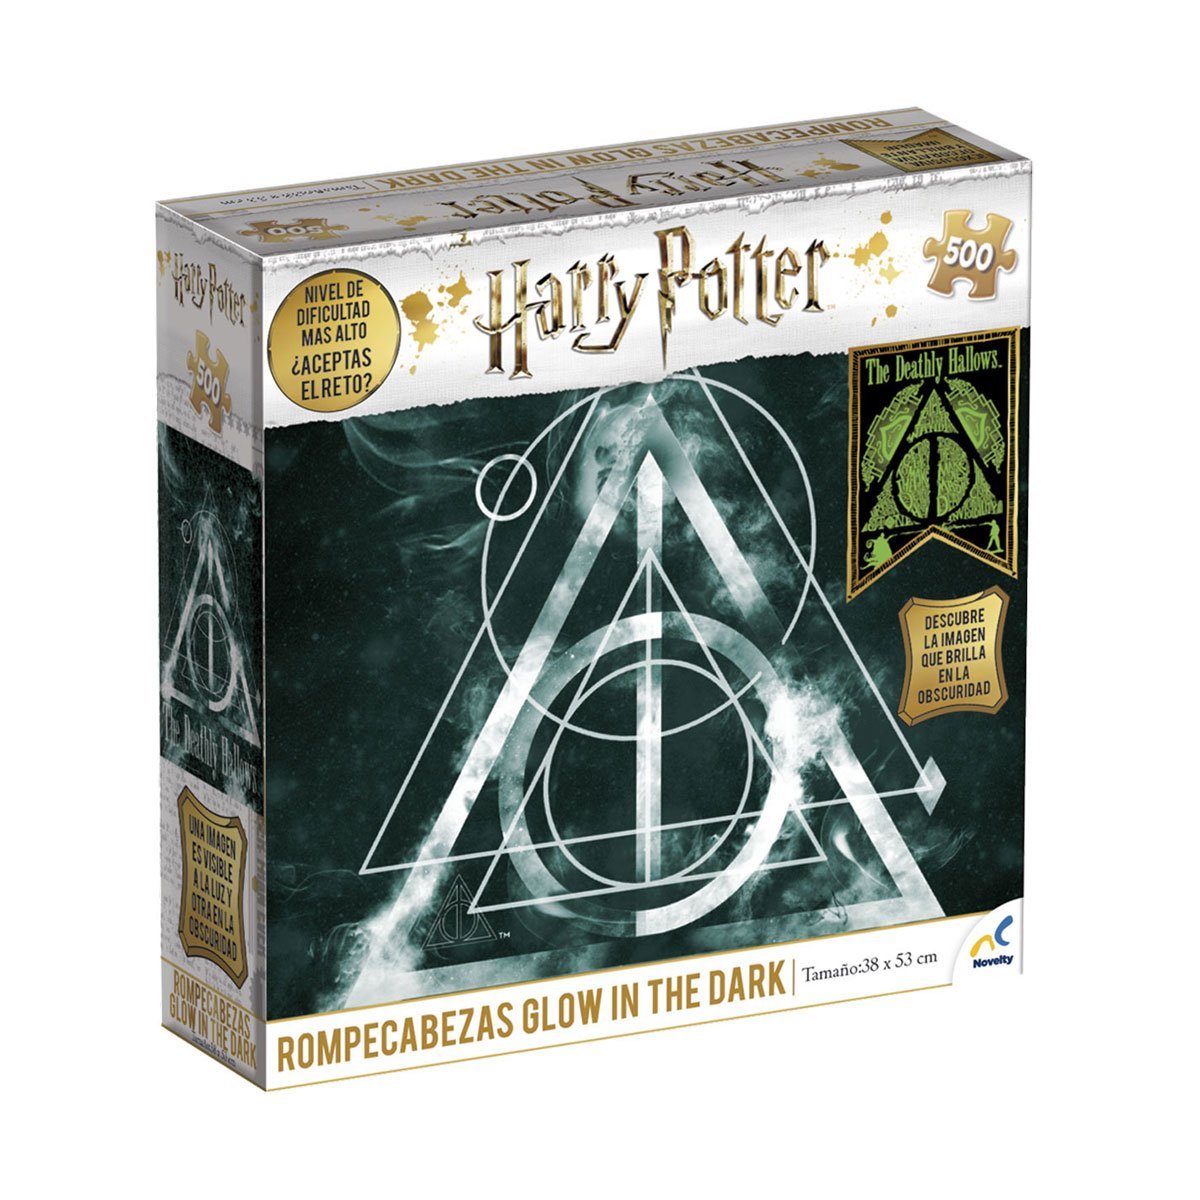 Rompecabezas Glow In The Dark 500 Piezas Harry Potter Novelty